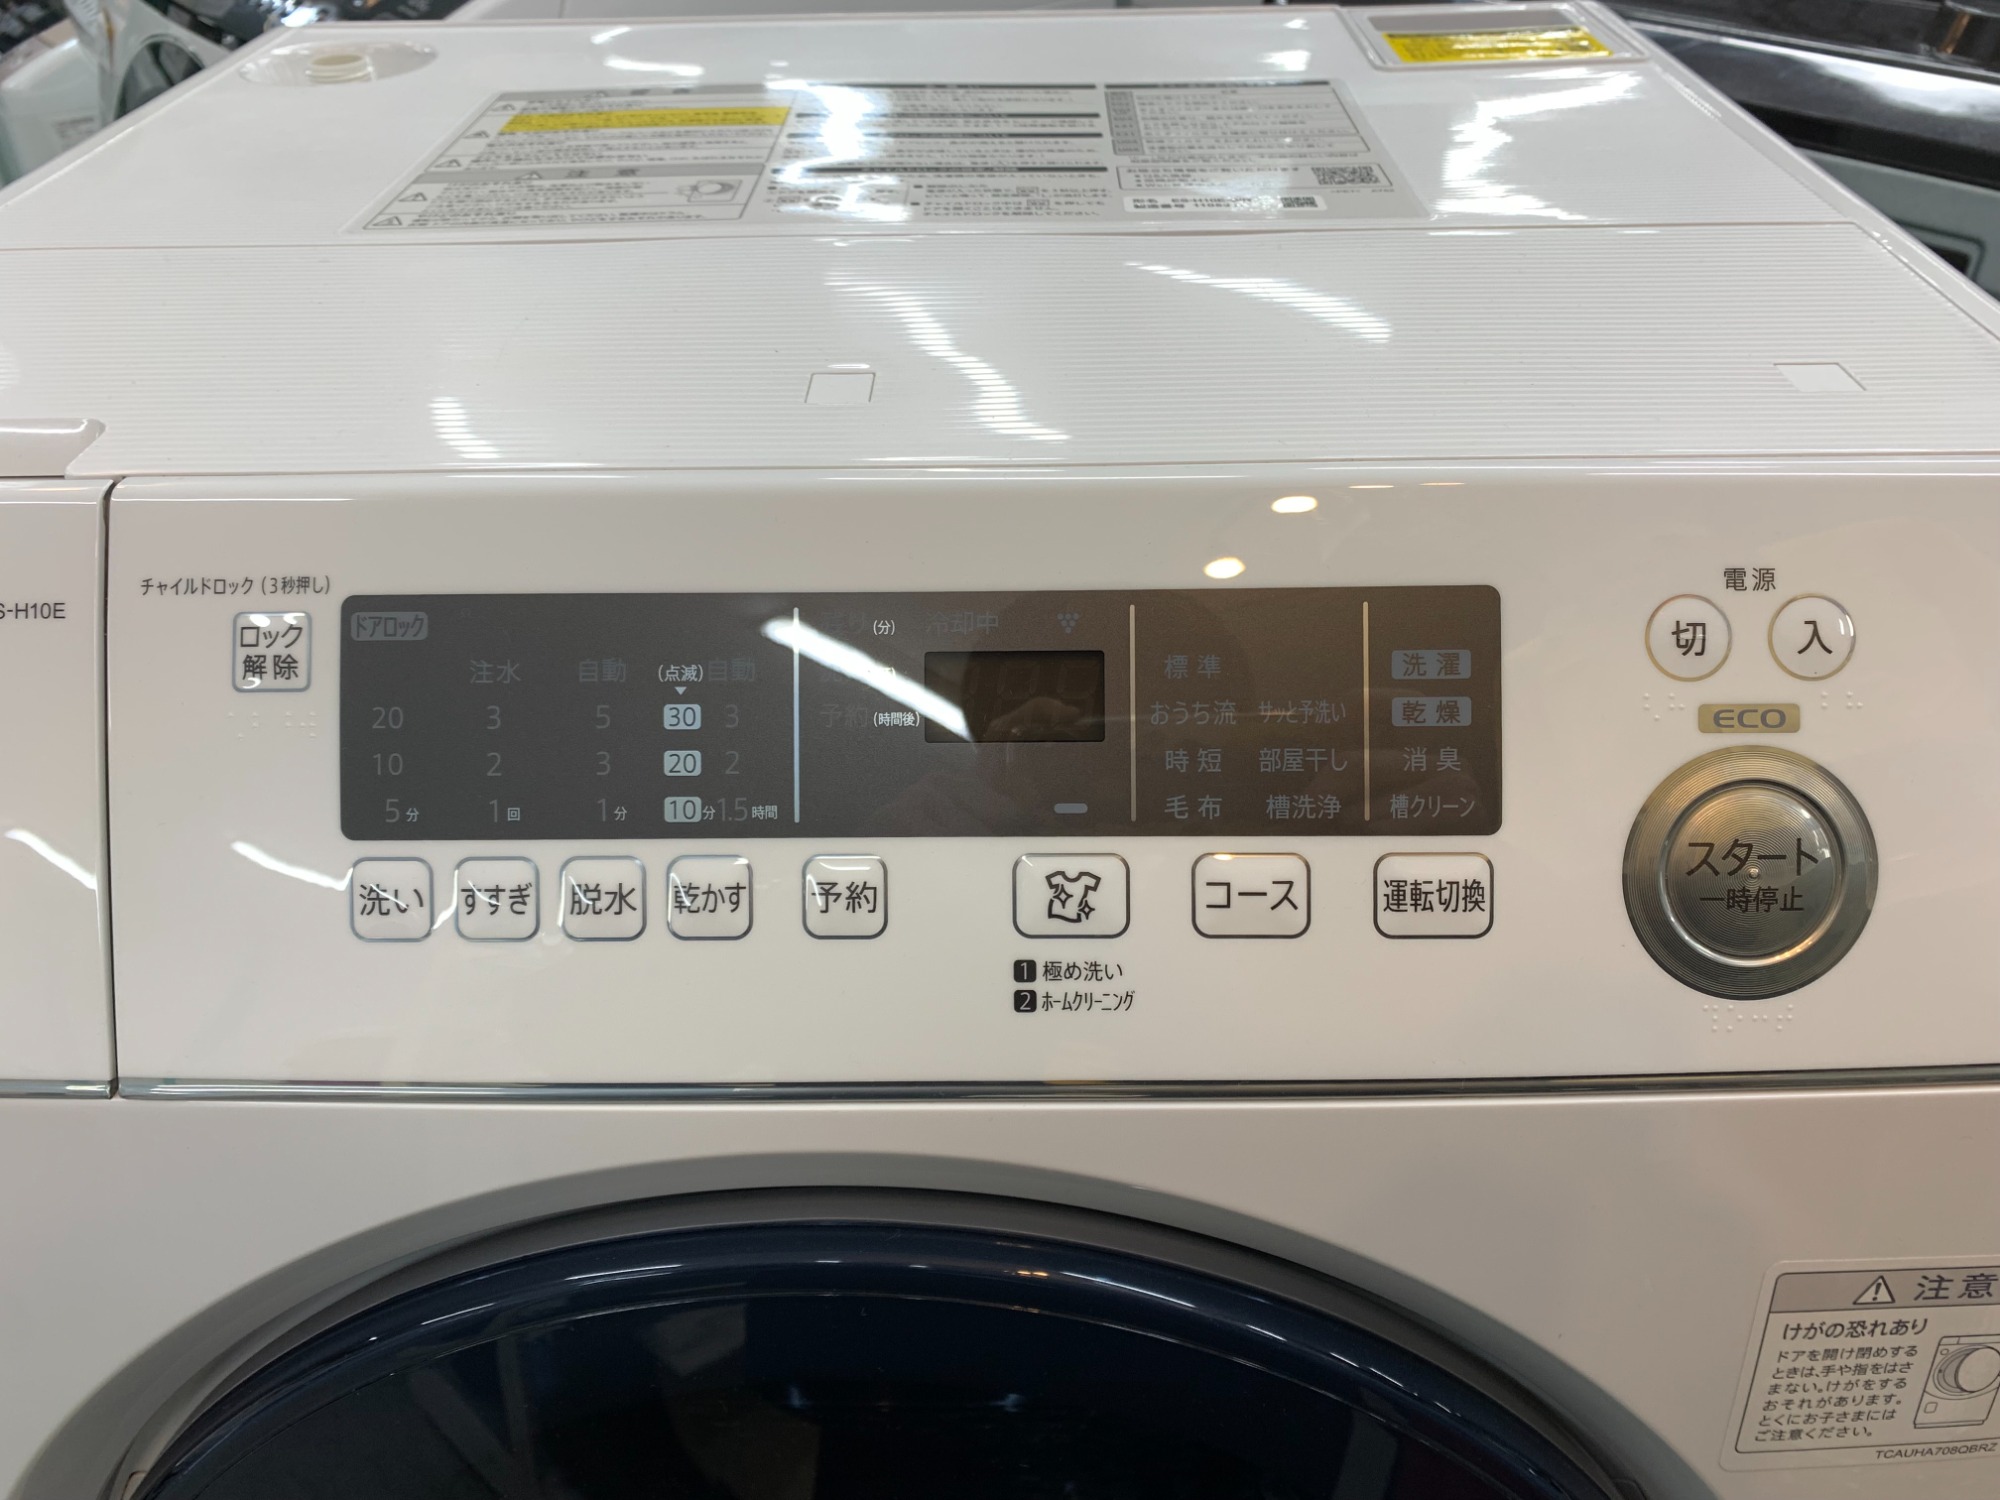 SHARP ドラム式洗濯乾燥機 ES HE .0kg 年製